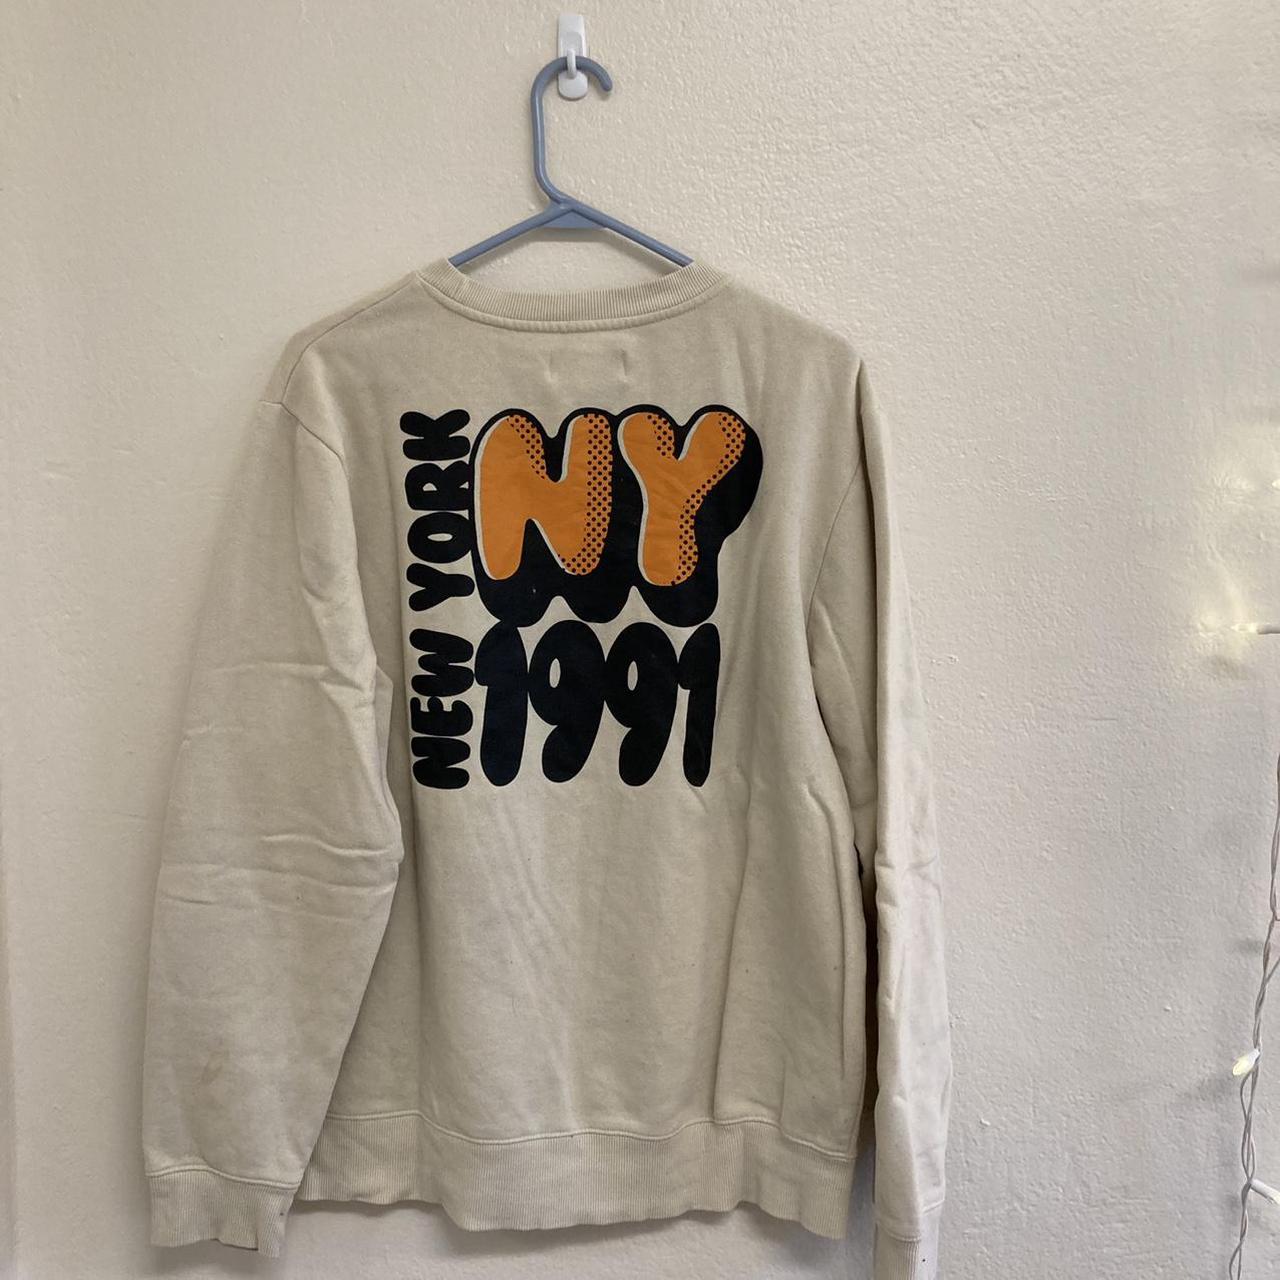 Product Image 4 - Cotton On NY Sweatshirt
• Tagged